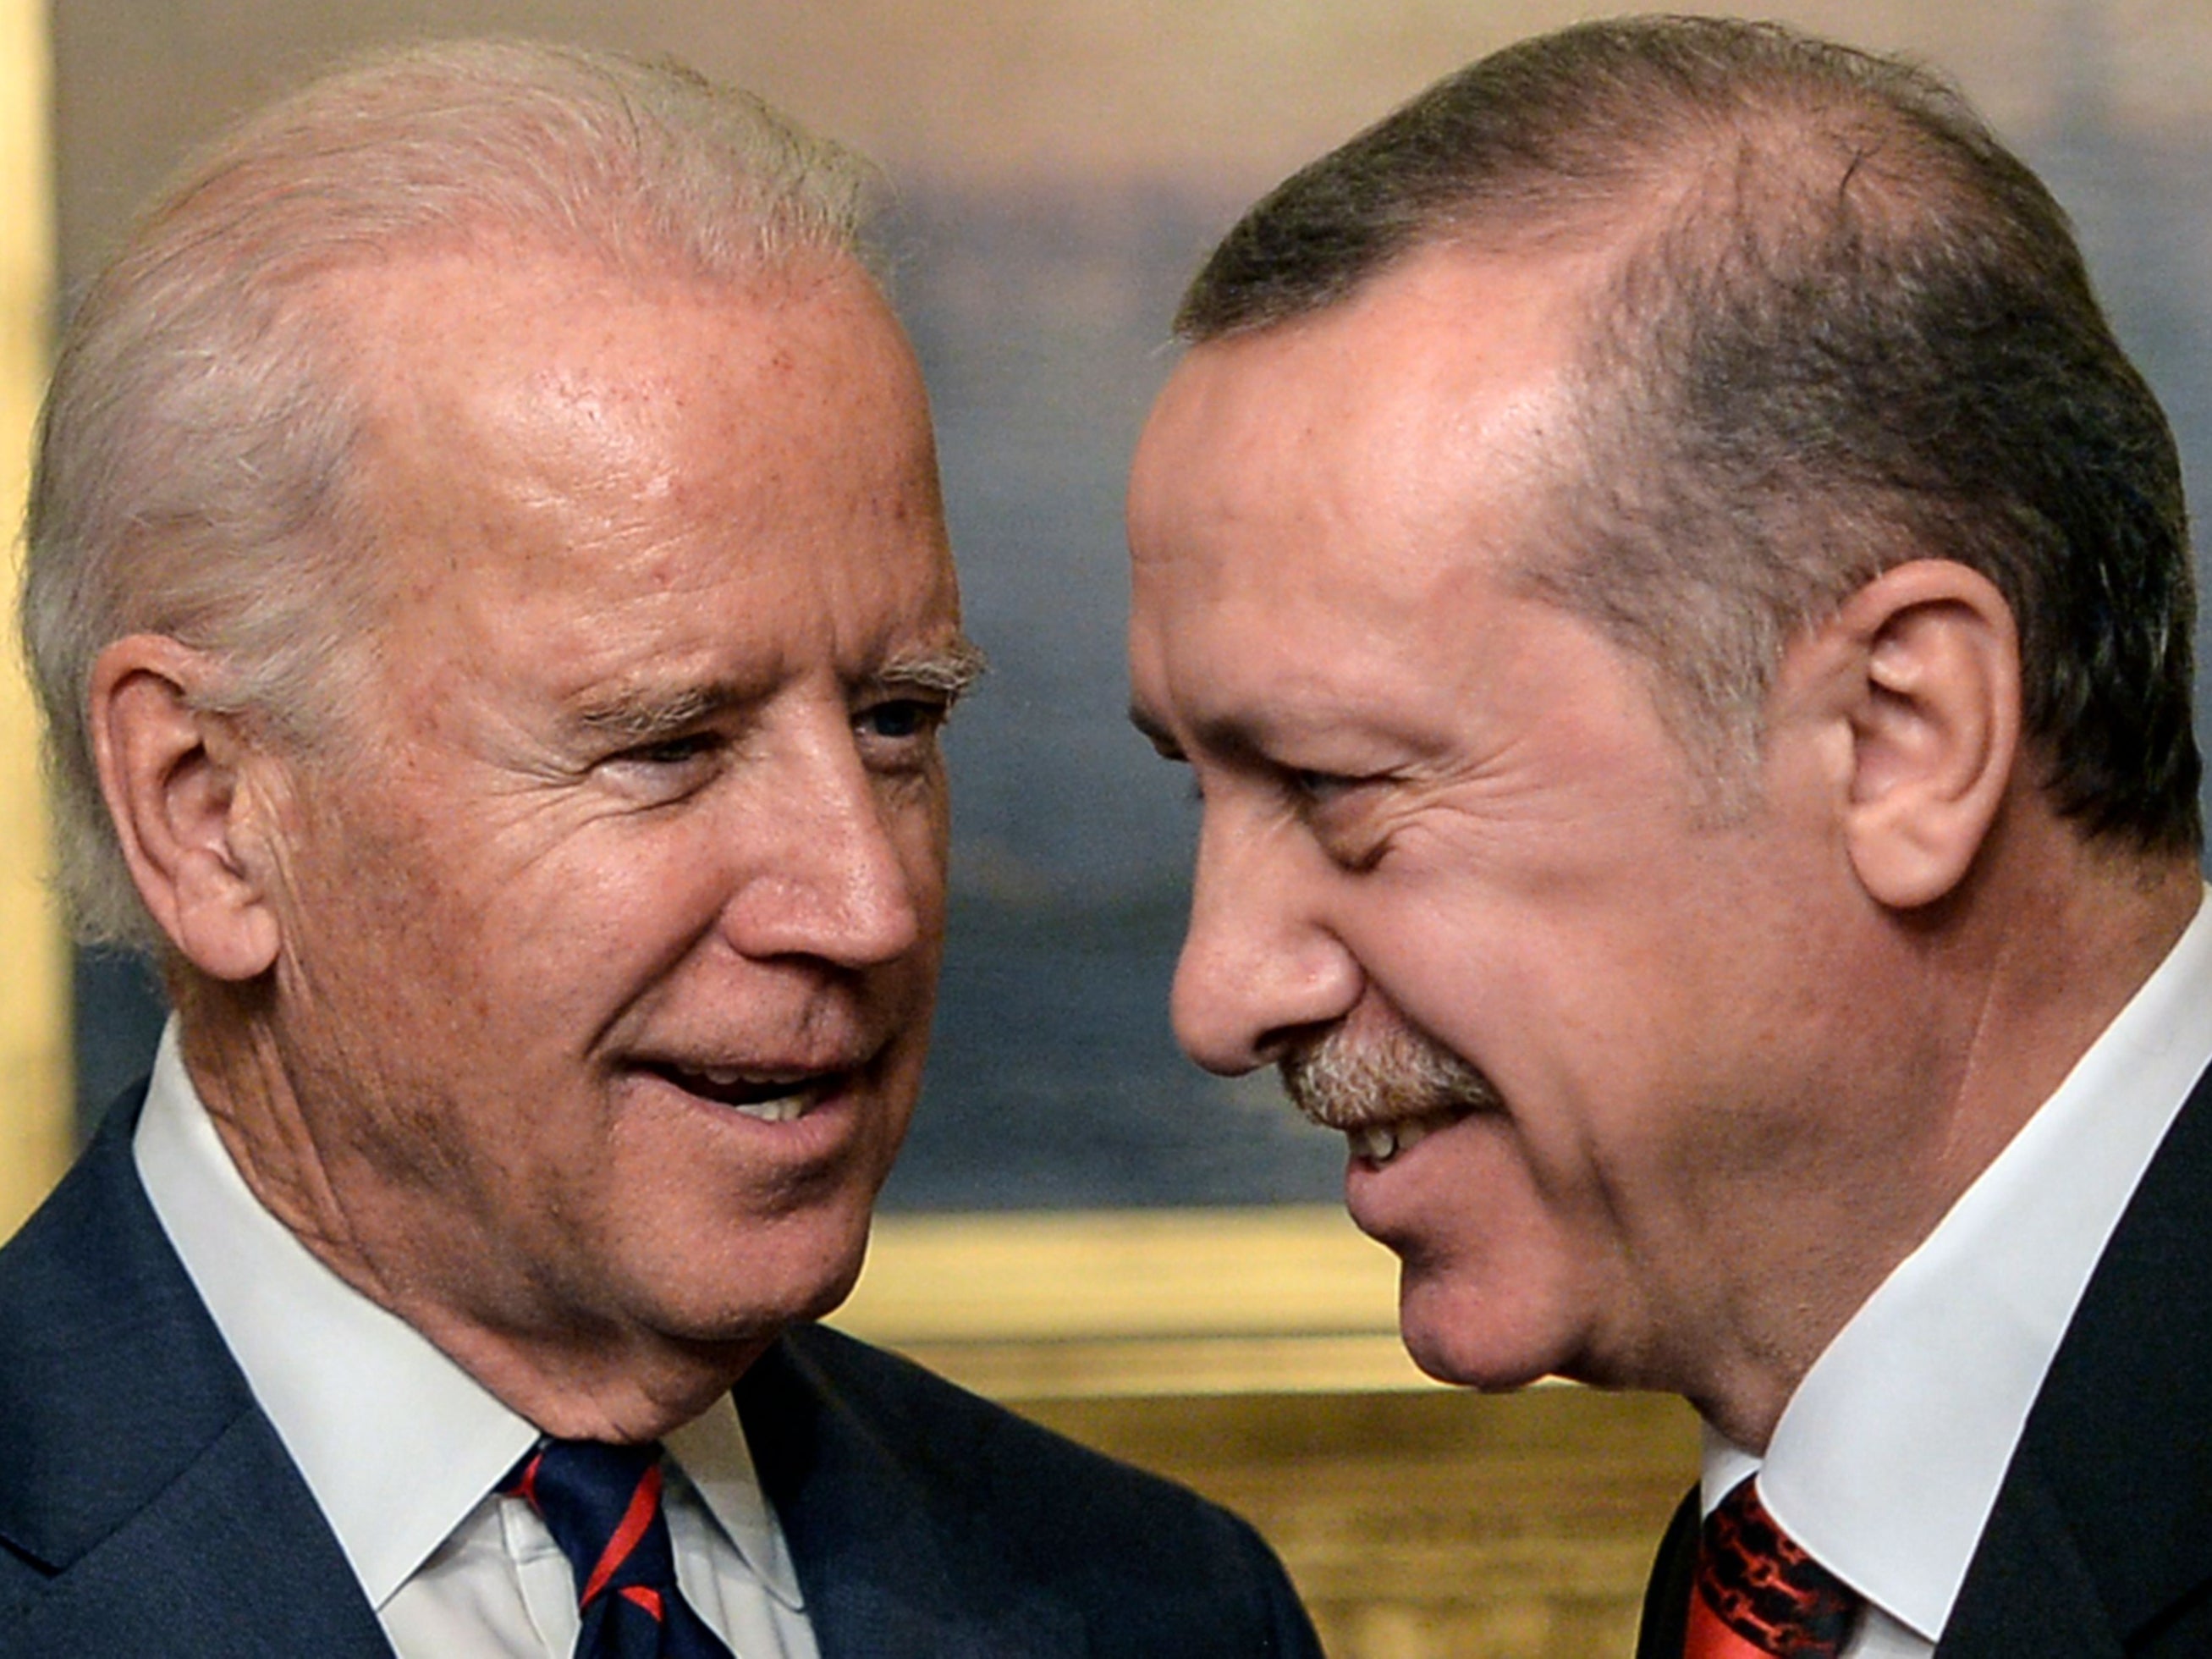 In this file photo taken on 22 November 2014, then US Vice President Joe Biden (L) speaks with Turkish President Recep Tayyip Erdogan at Beylerbeyi Palace in Istanbul